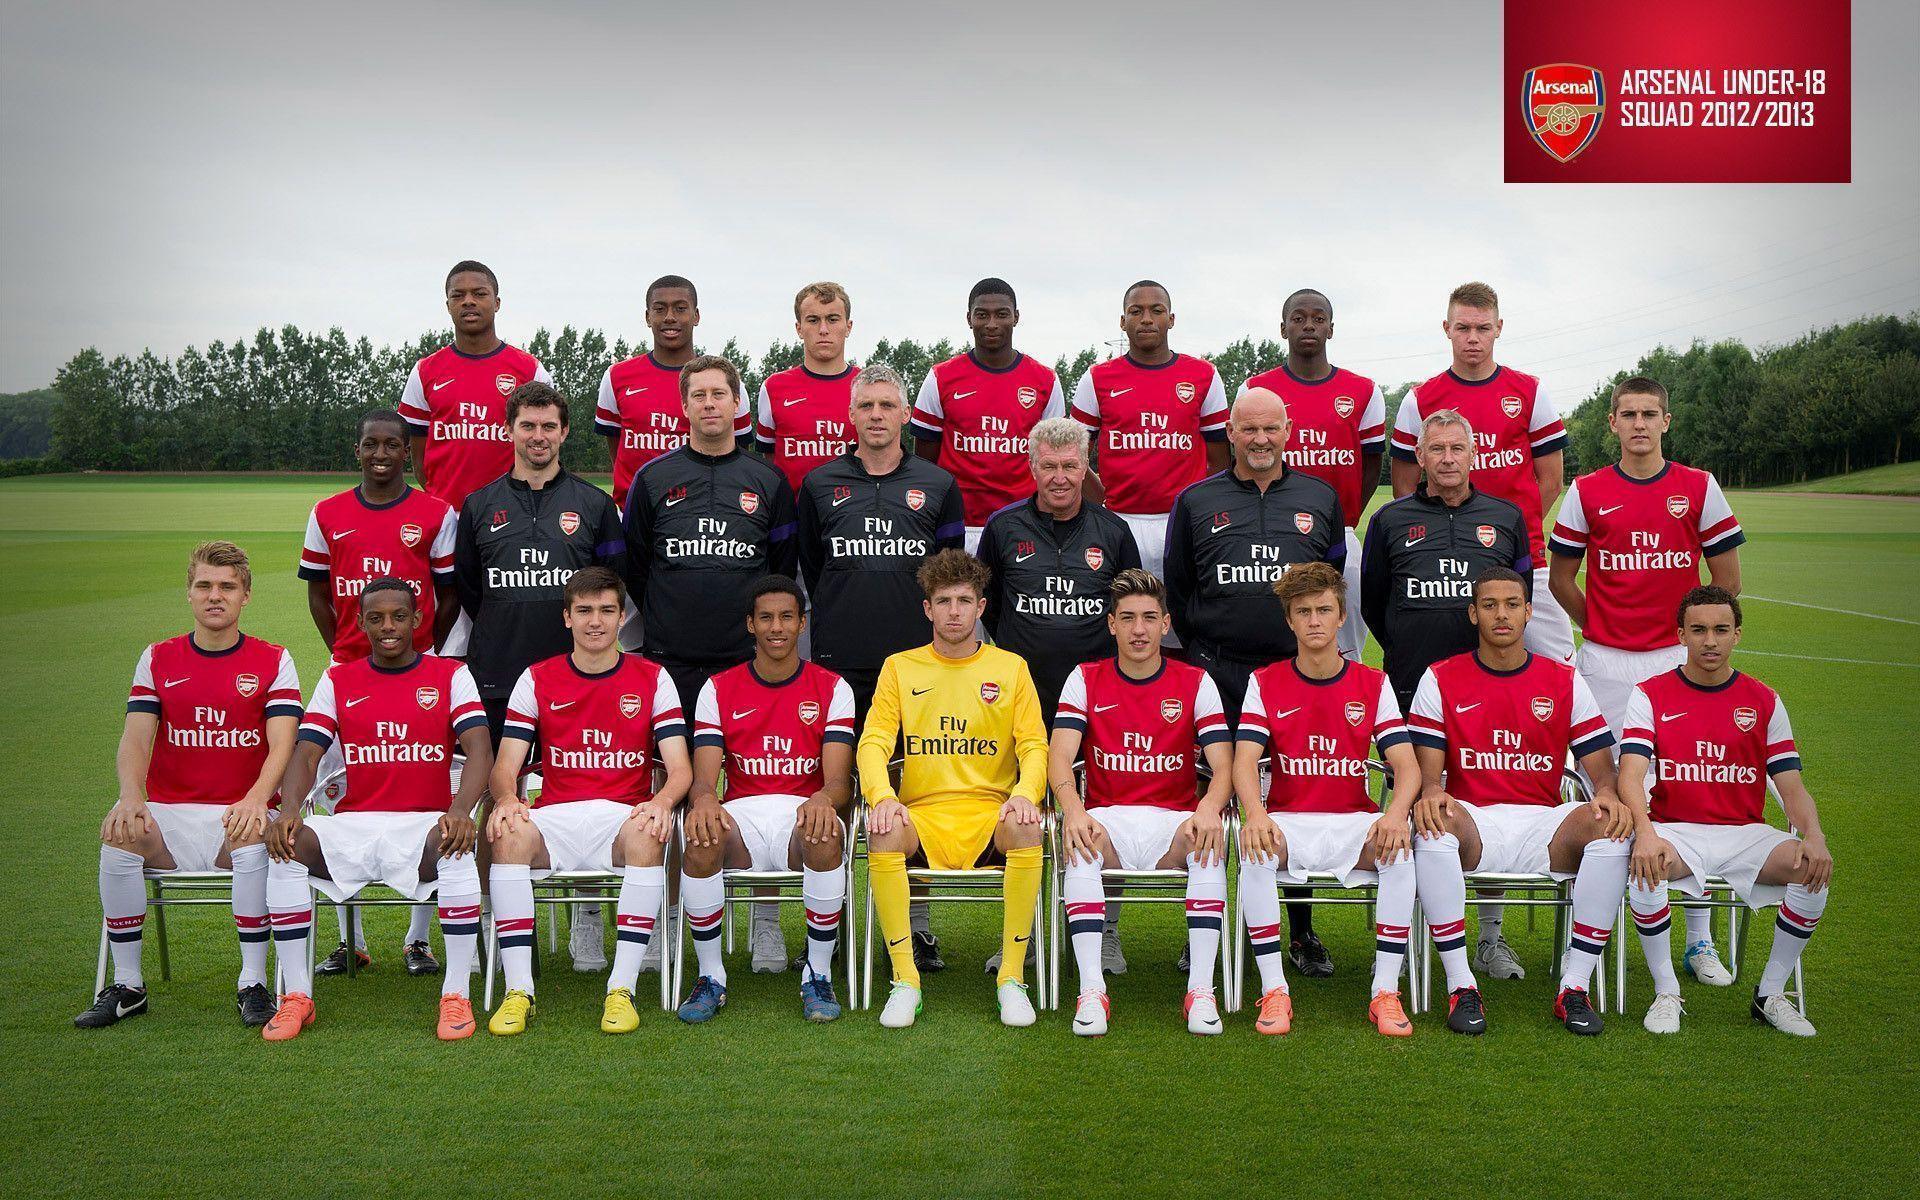 Arsenal player team wallpaper desktop free download